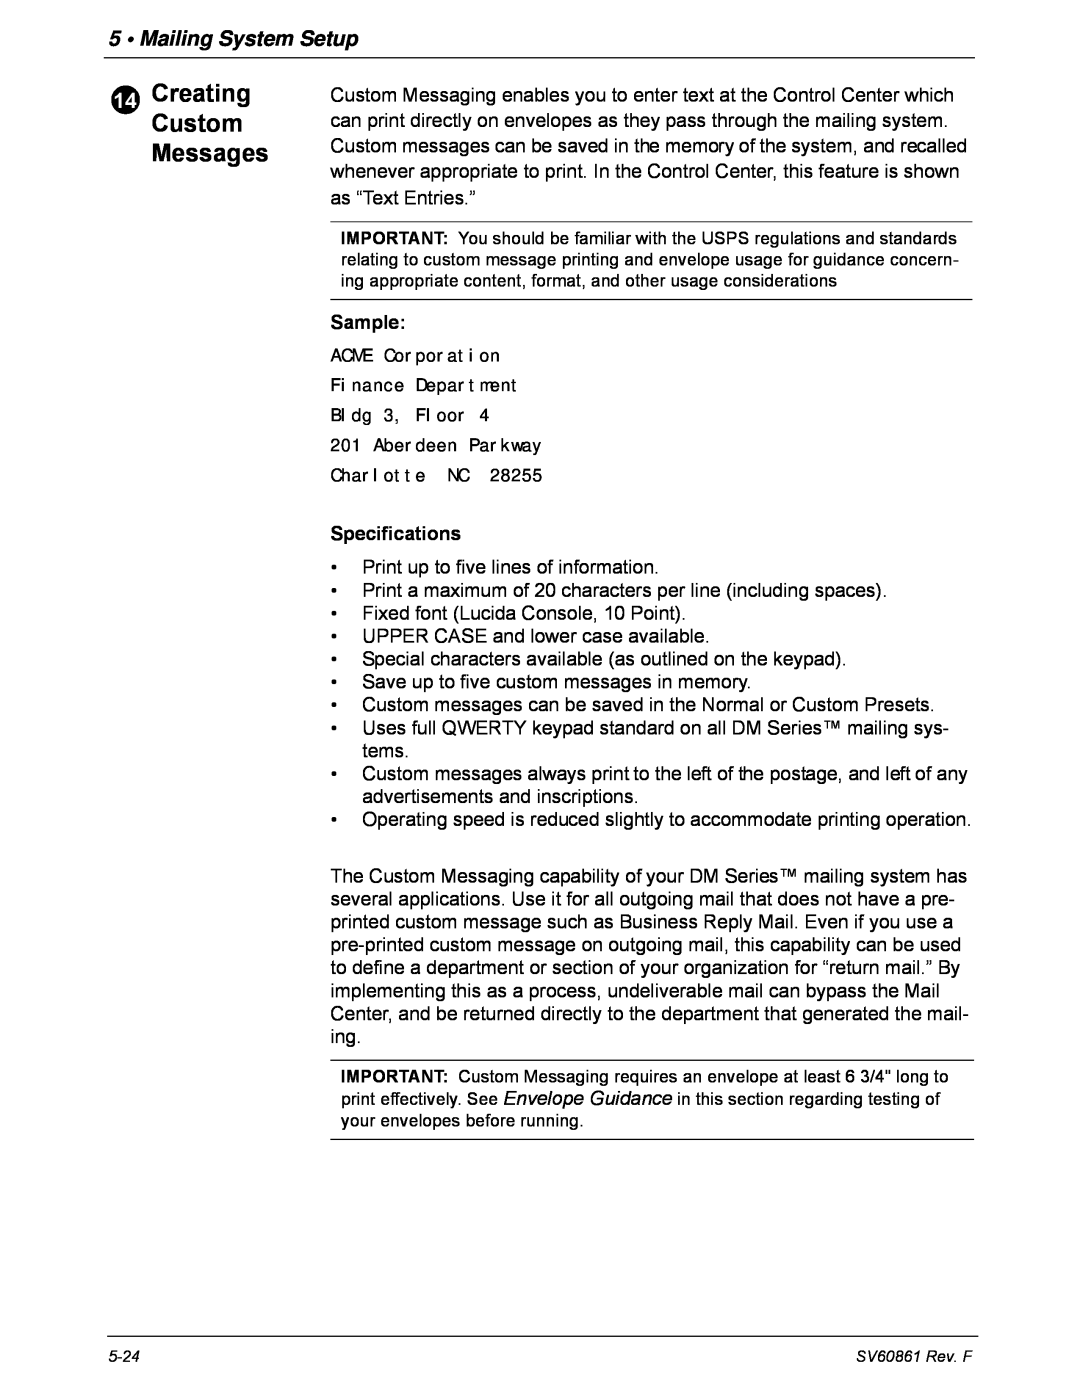 Pitney Bowes DM900, DM800 manual Mailing System Setup, Sample, Specifications 